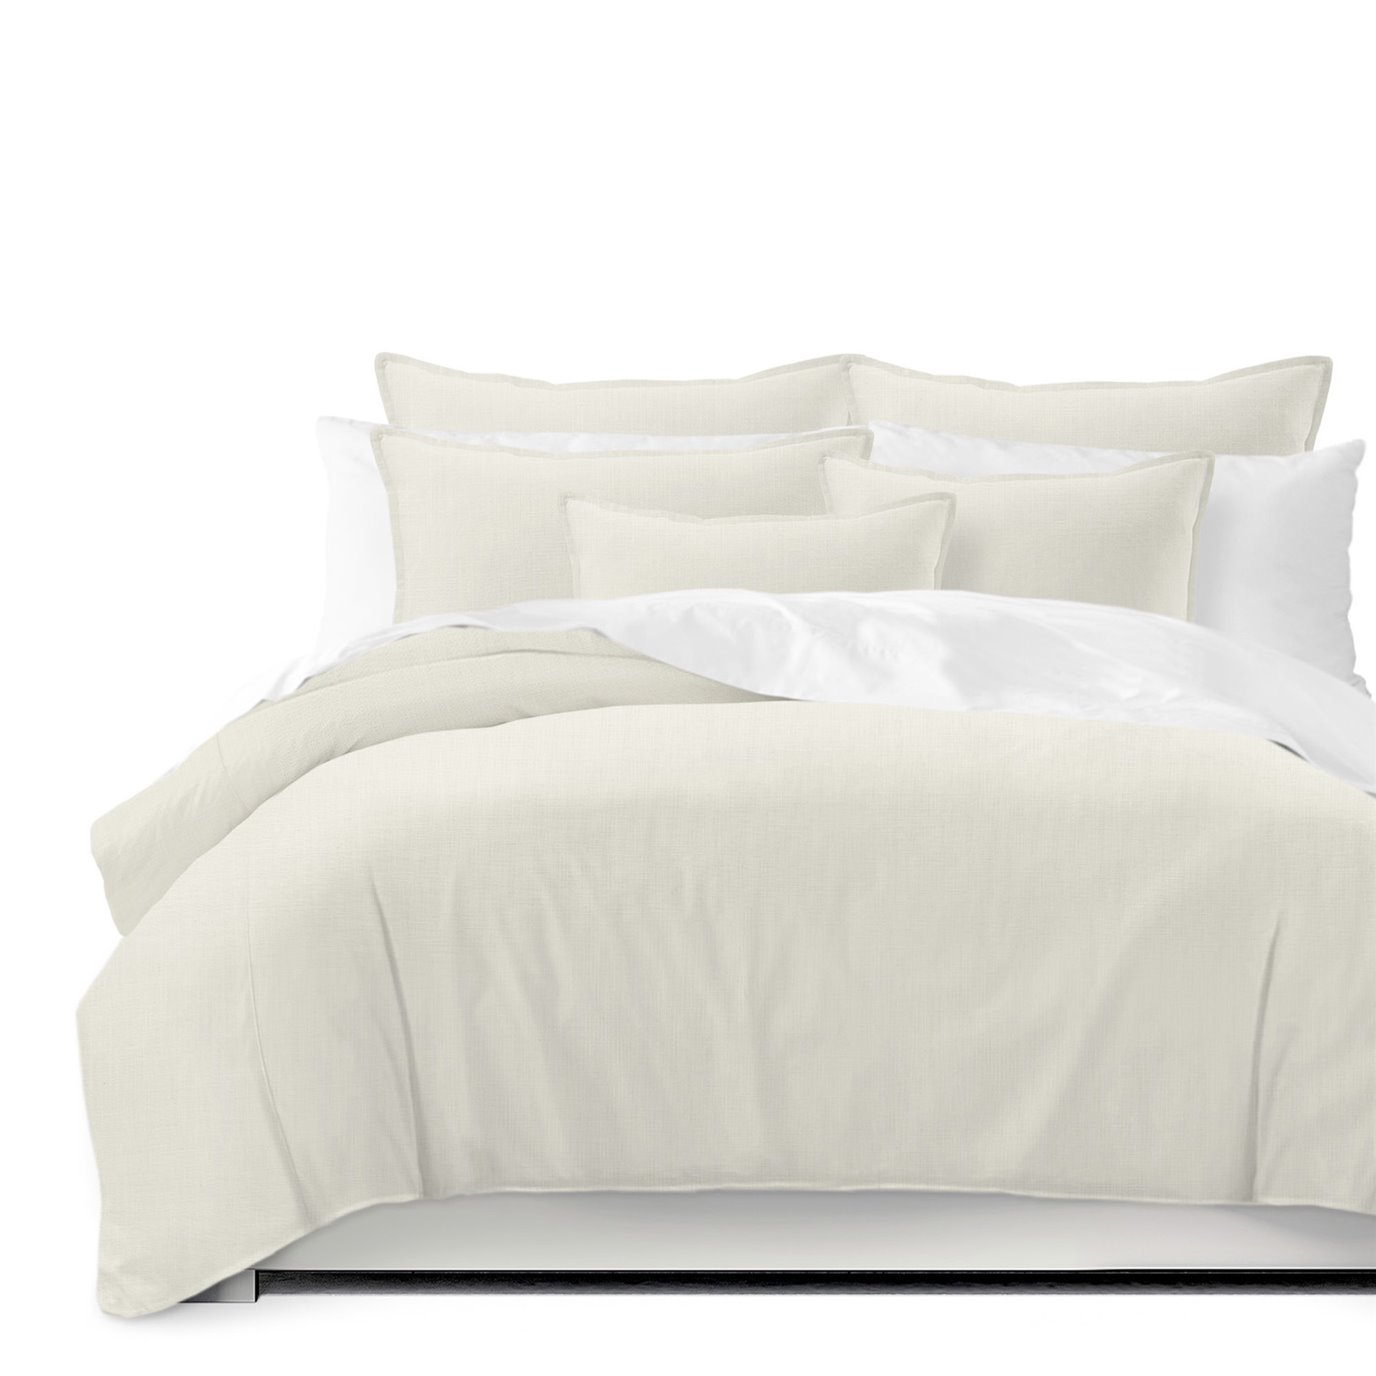 Ancebridge Vanilla Coverlet and Pillow Sham(s) Set - Size Queen